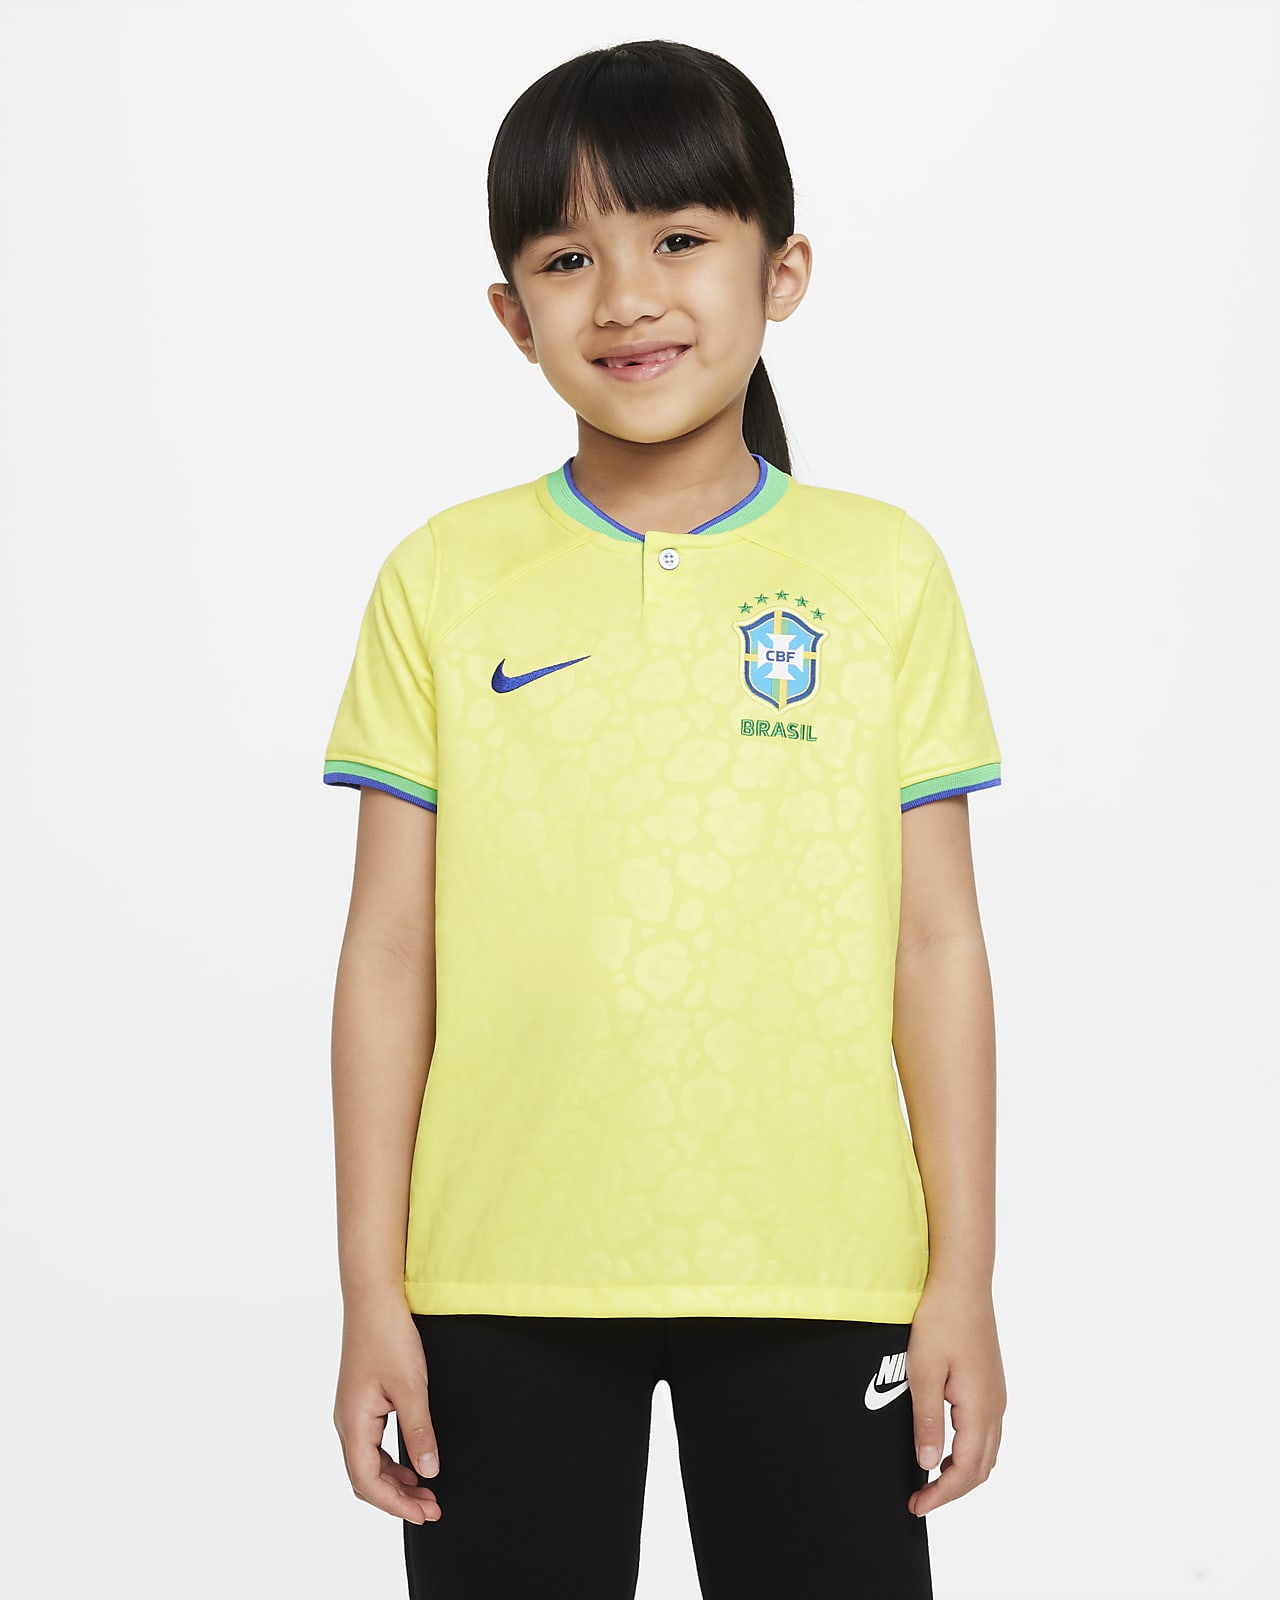 Brazil Home Little Kids' Nike Dri-FIT Soccer Jersey. Nike.com